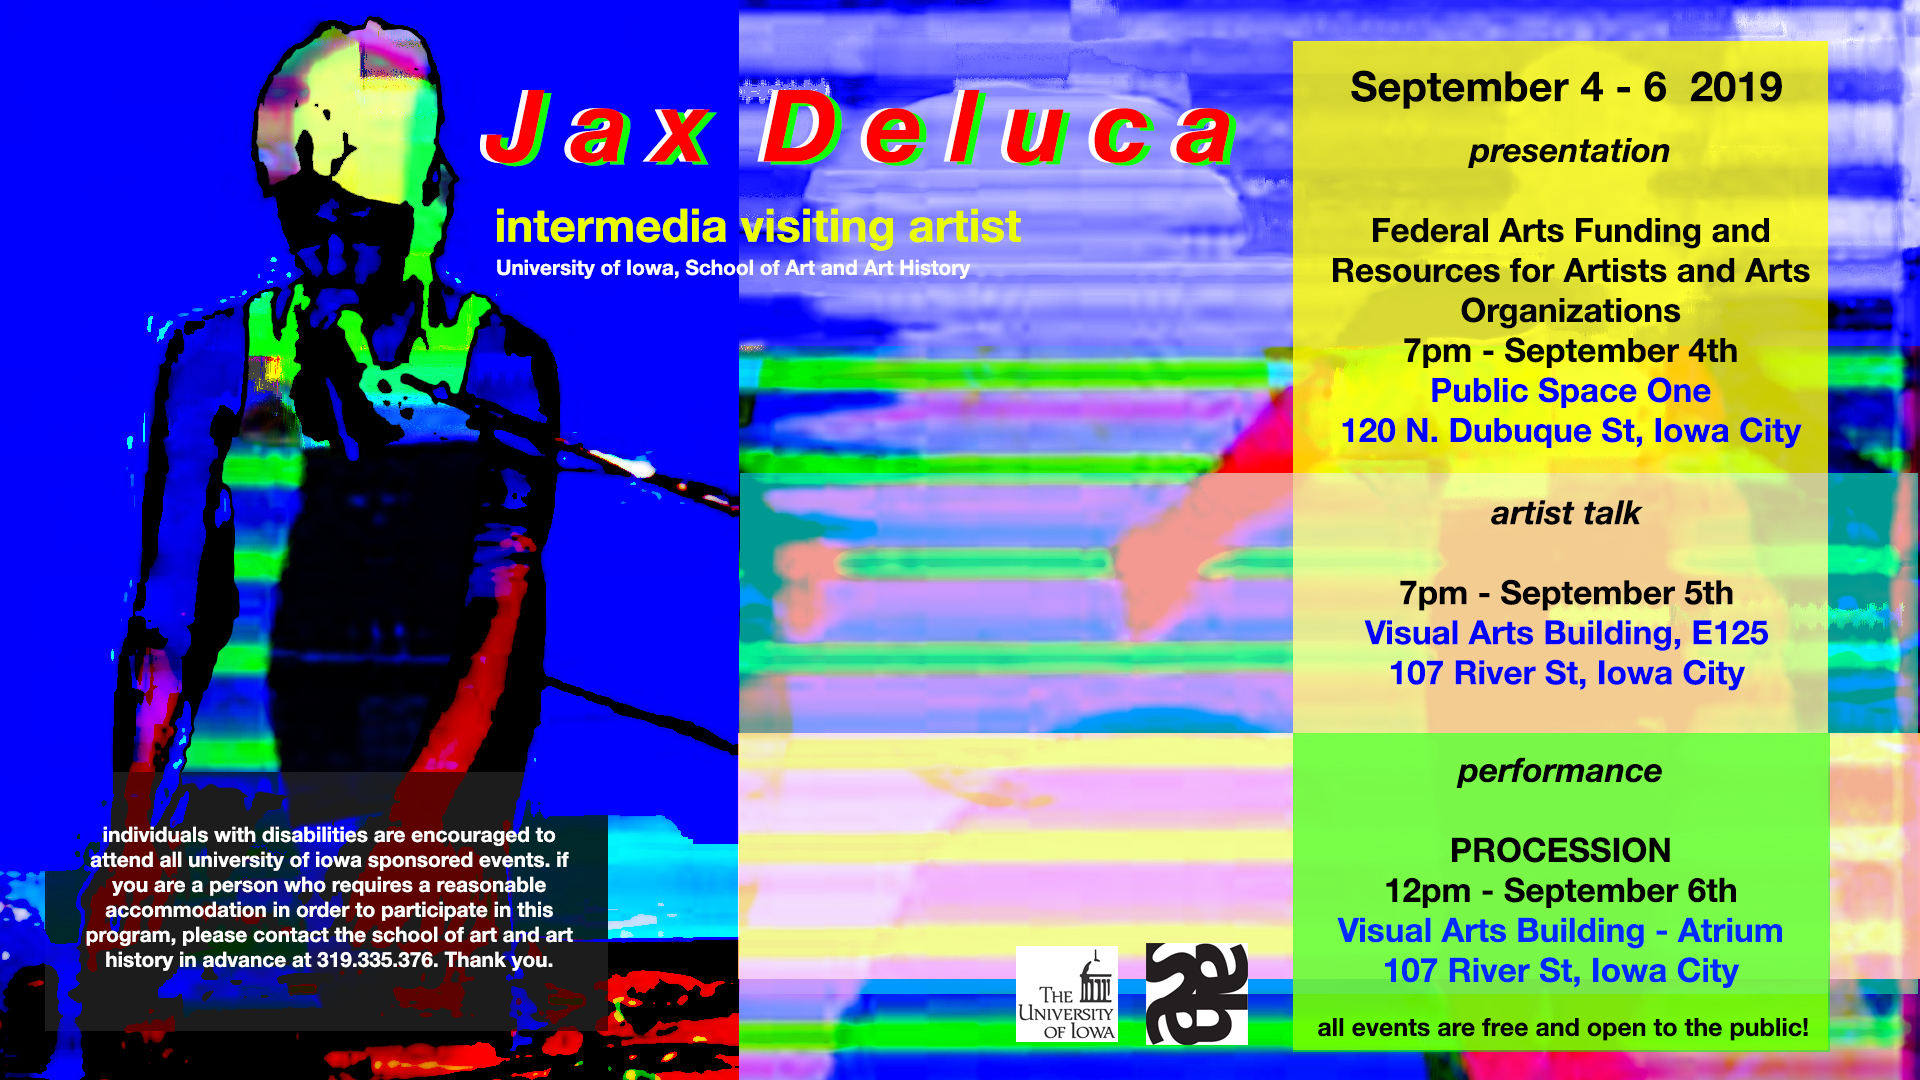 Jax Deluca artist talk September 5th 7:00pm E125 VAB, performance 12:00pm September 6th 12:00pm VAB Atrium